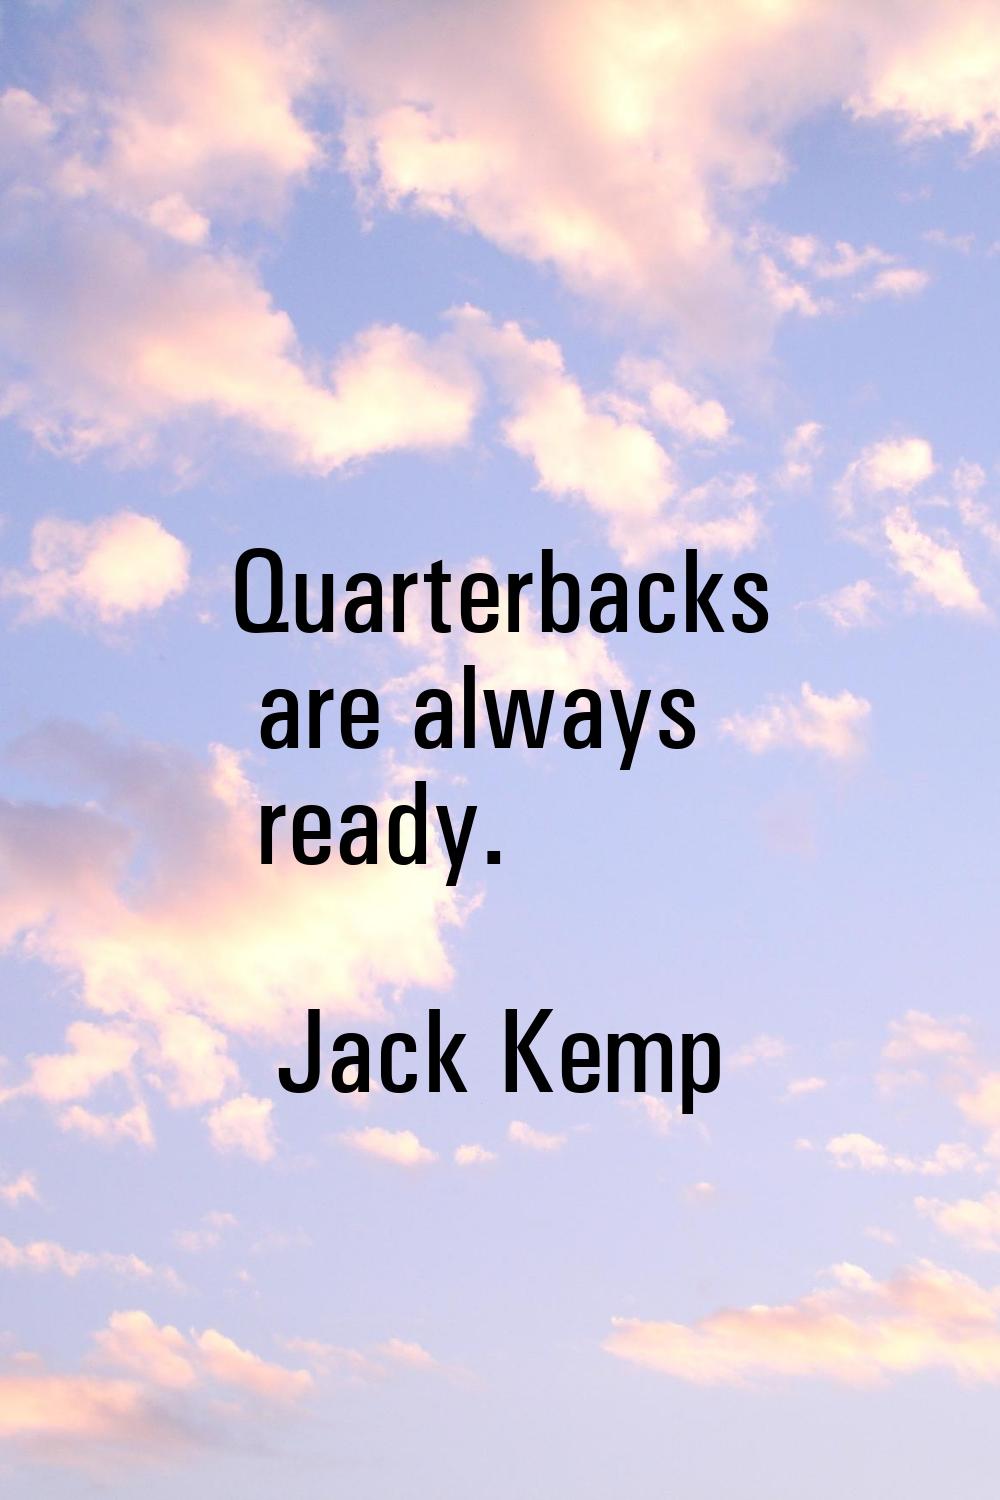 Quarterbacks are always ready.